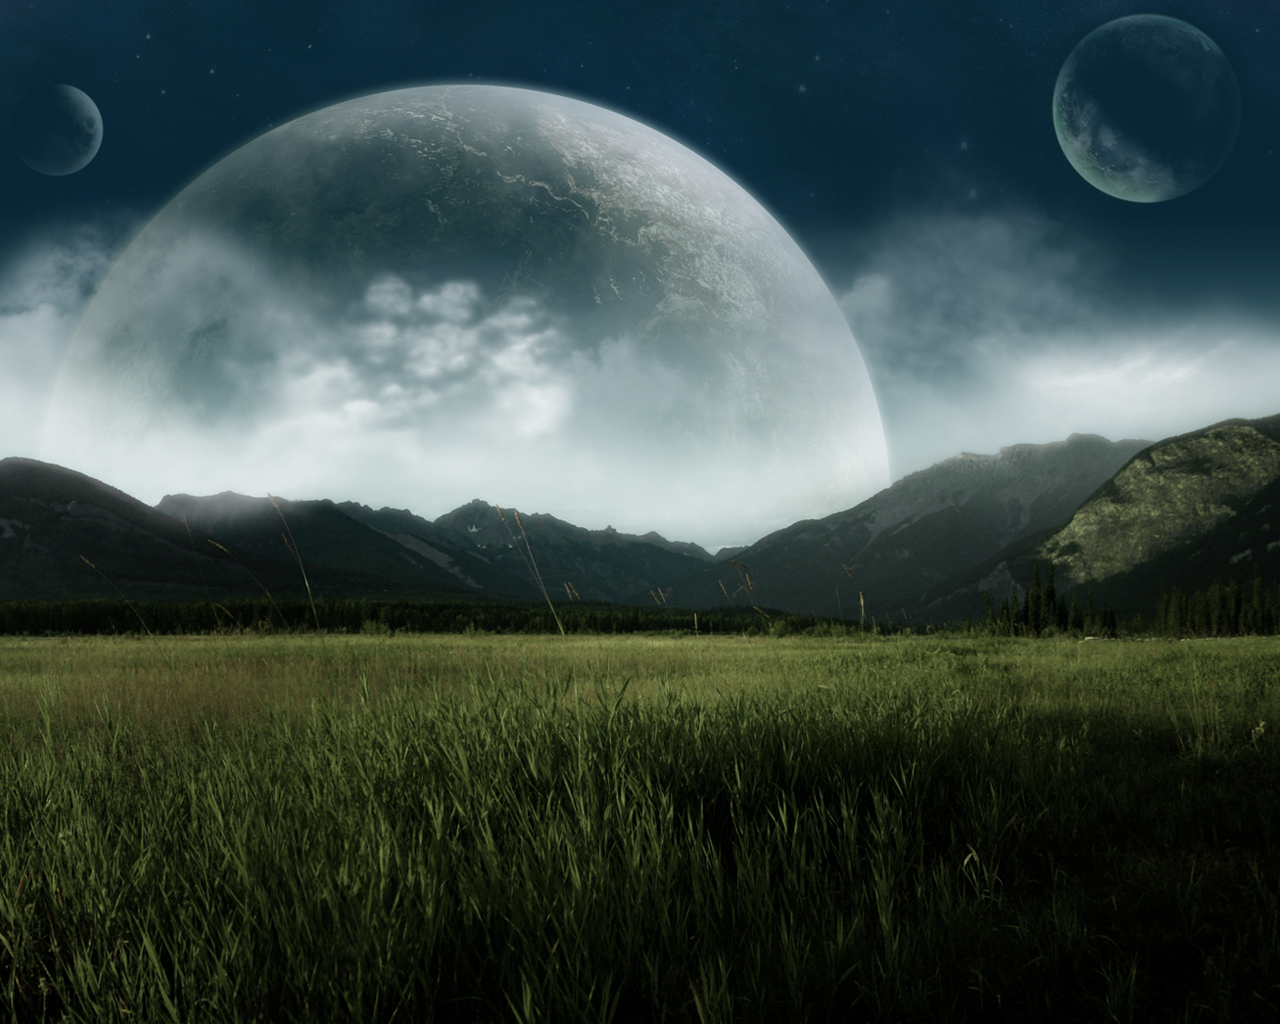 sci fi, planet rise Image for desktop